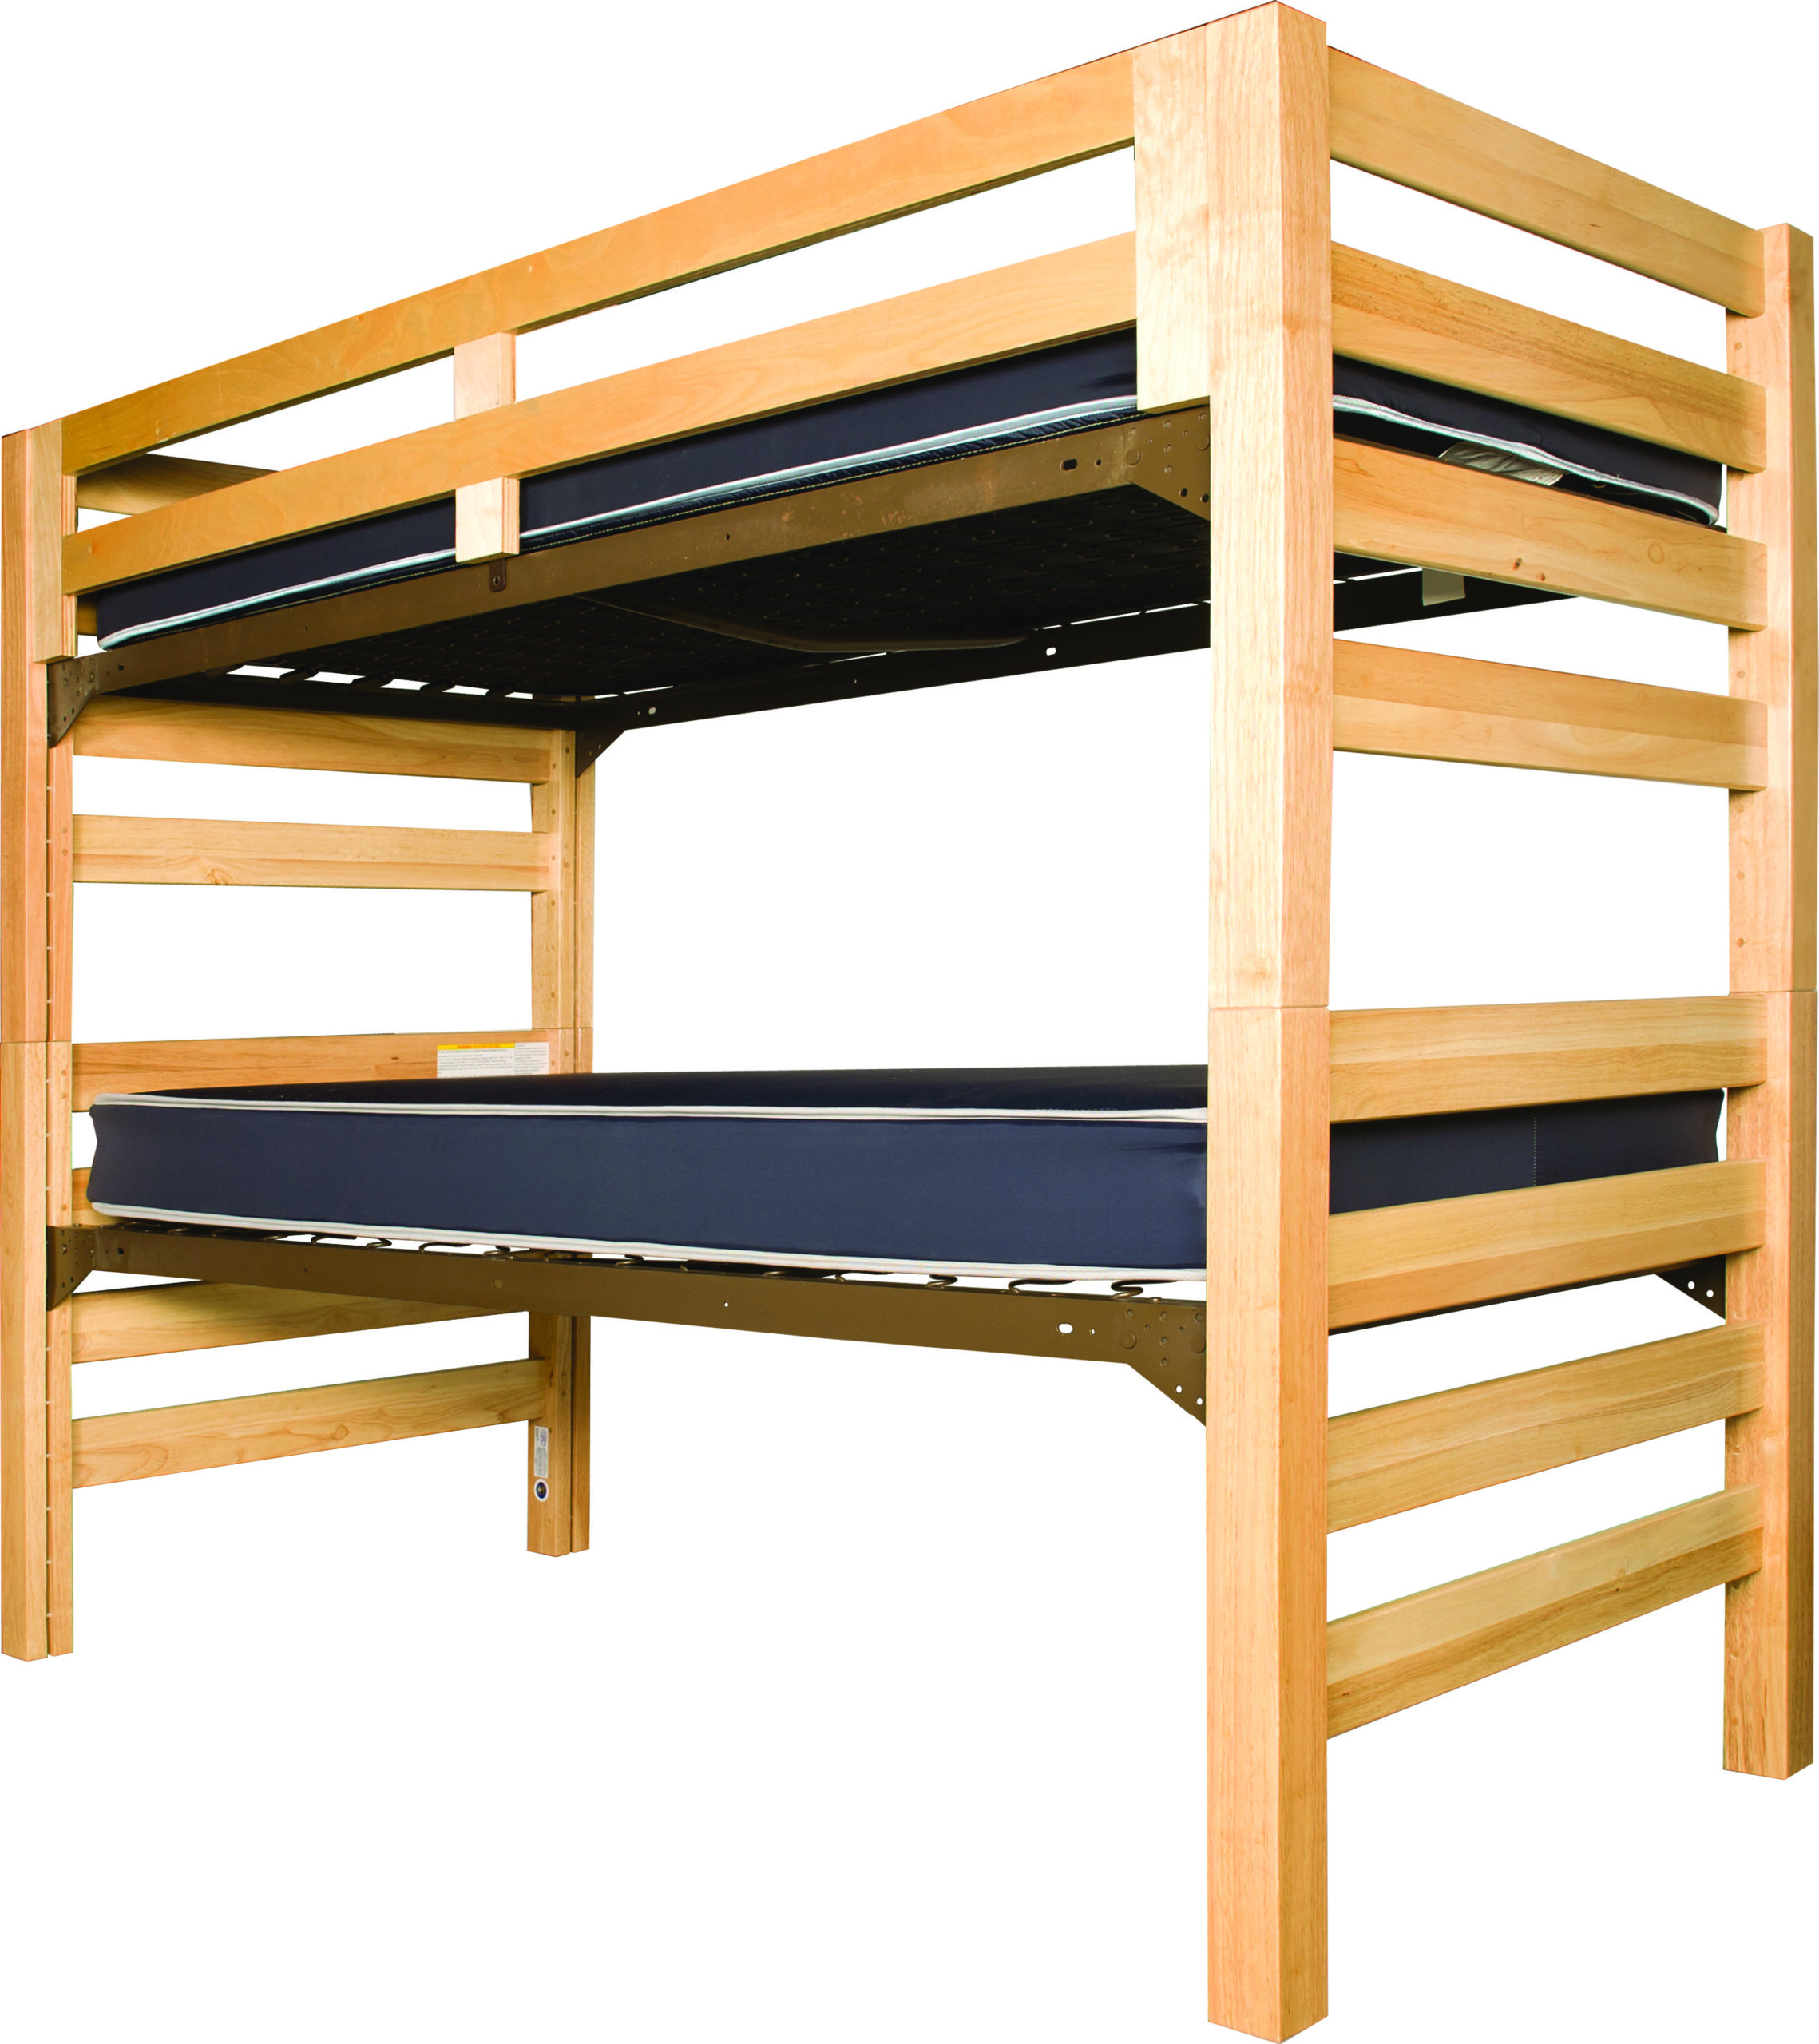 Graduate Bunk Bed Four Drawer Chest, Unstackable Bunk Beds